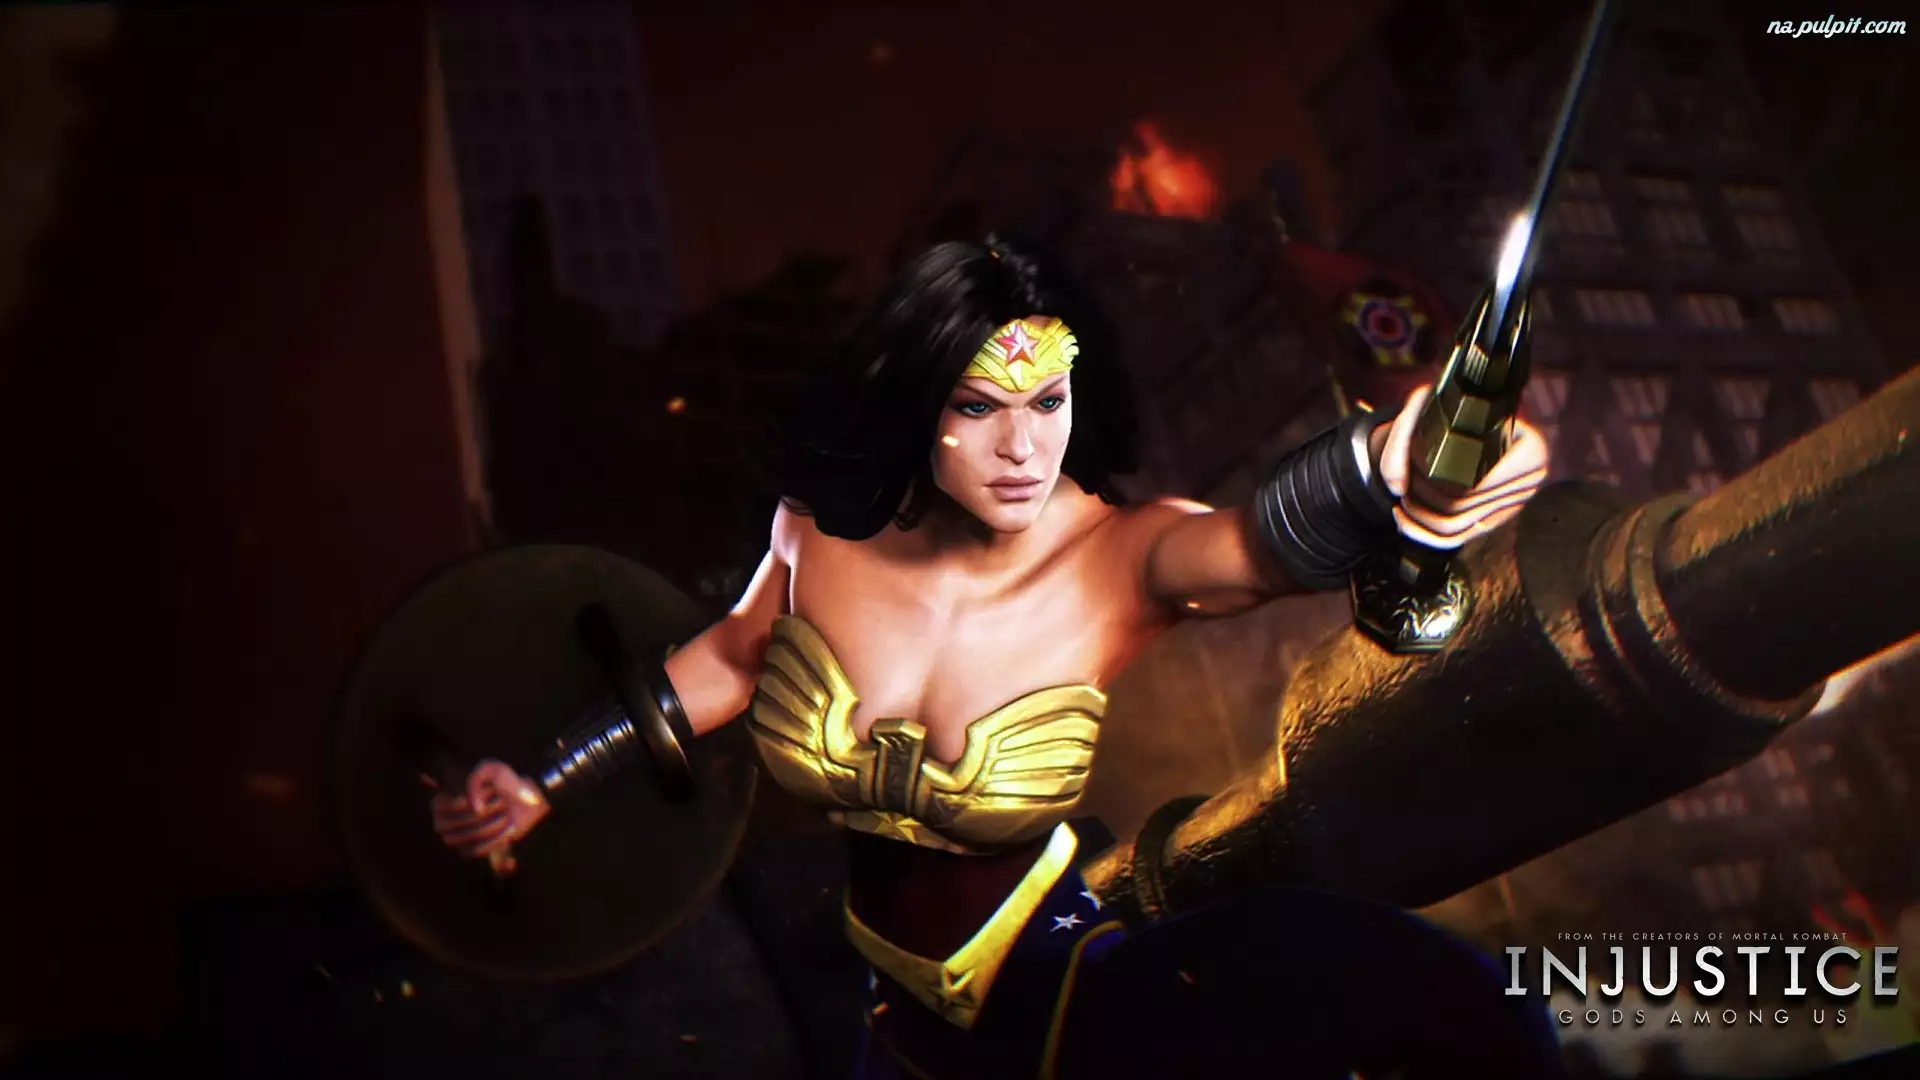 Wonder Woman, Injustice God Among Us